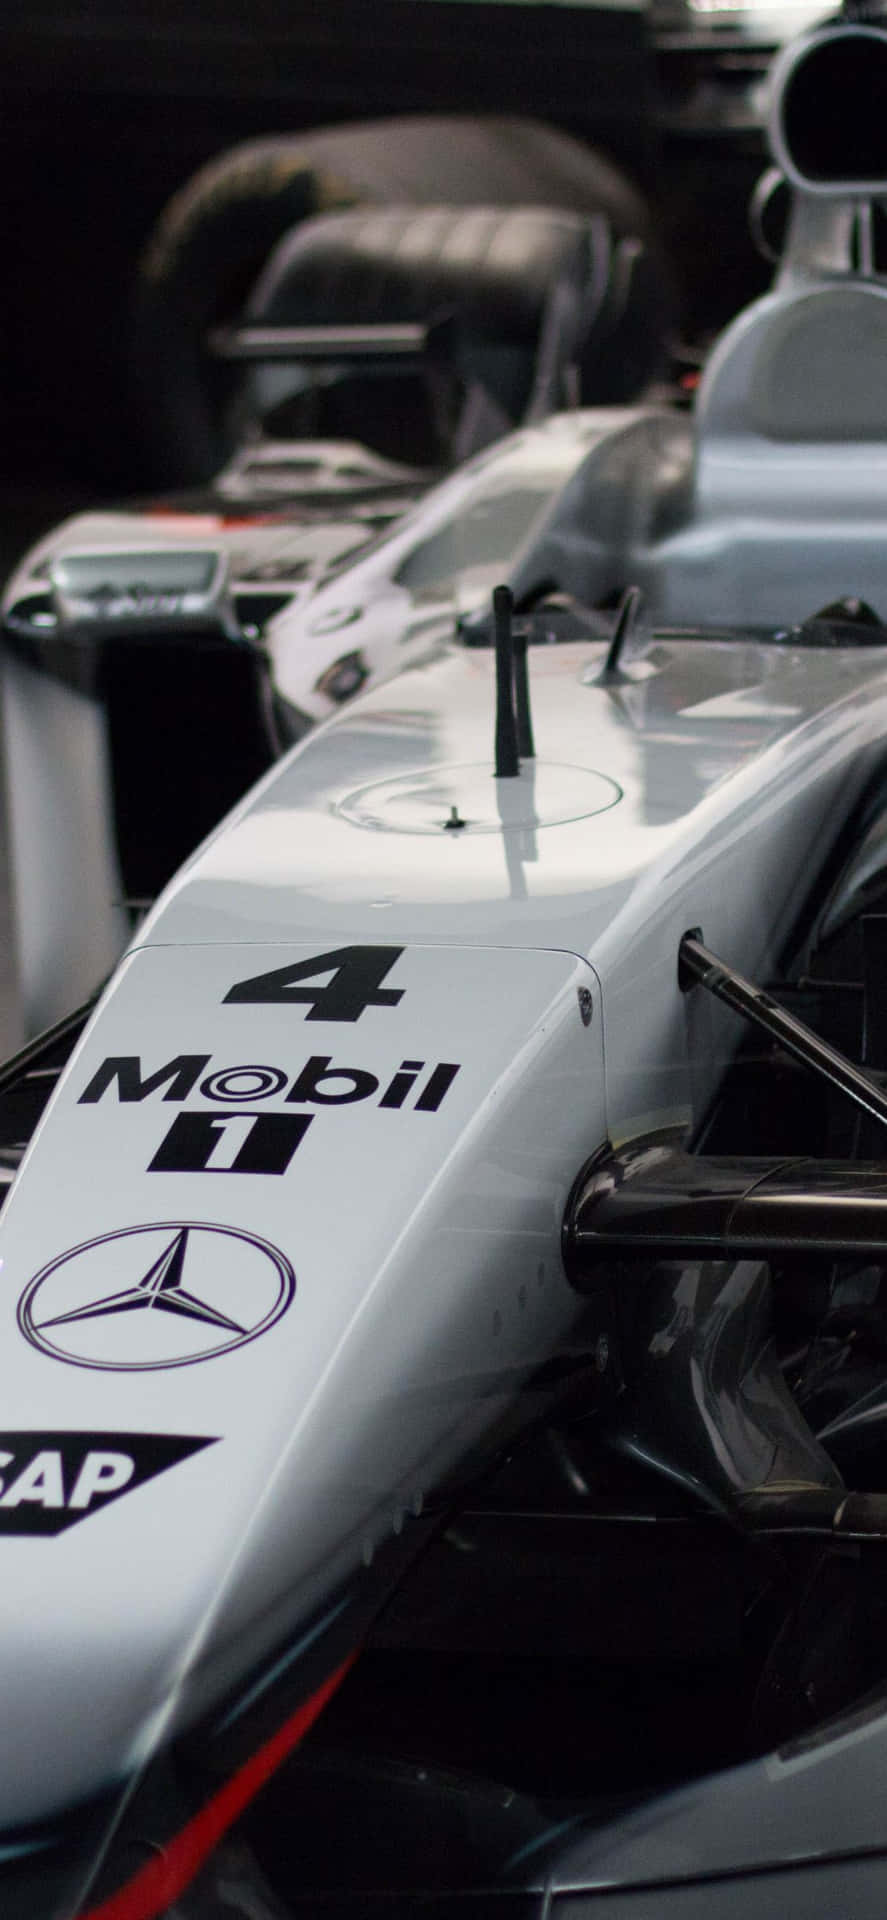 Unprimer Plano De Un Coche De Fórmula 1 De Mercedes Fondo de pantalla